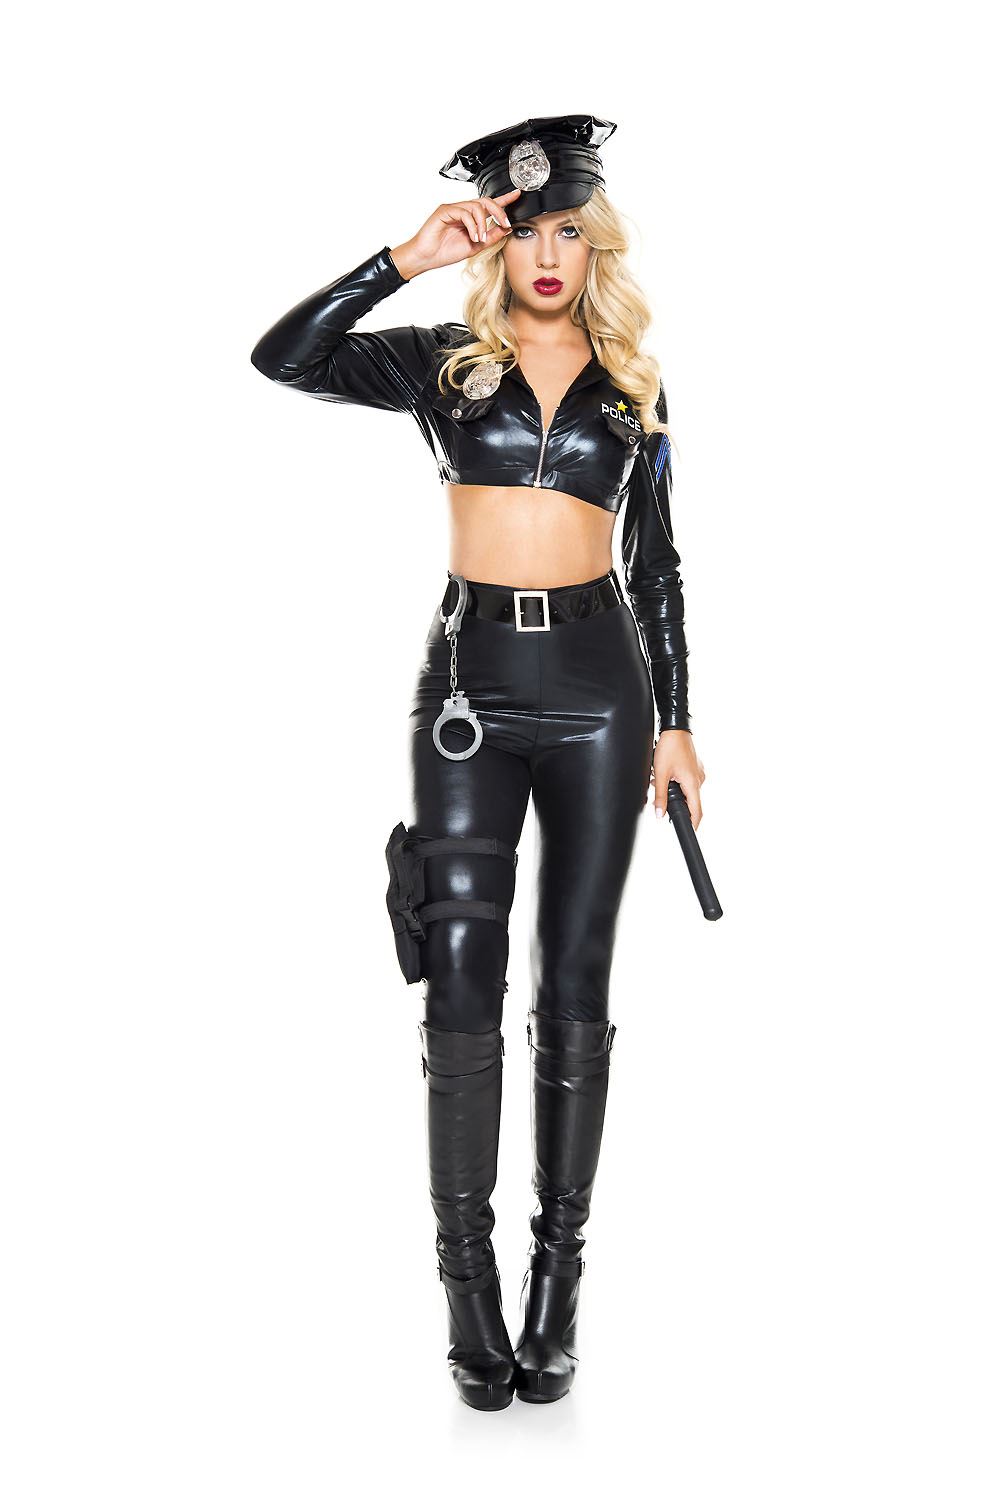 police girl costume